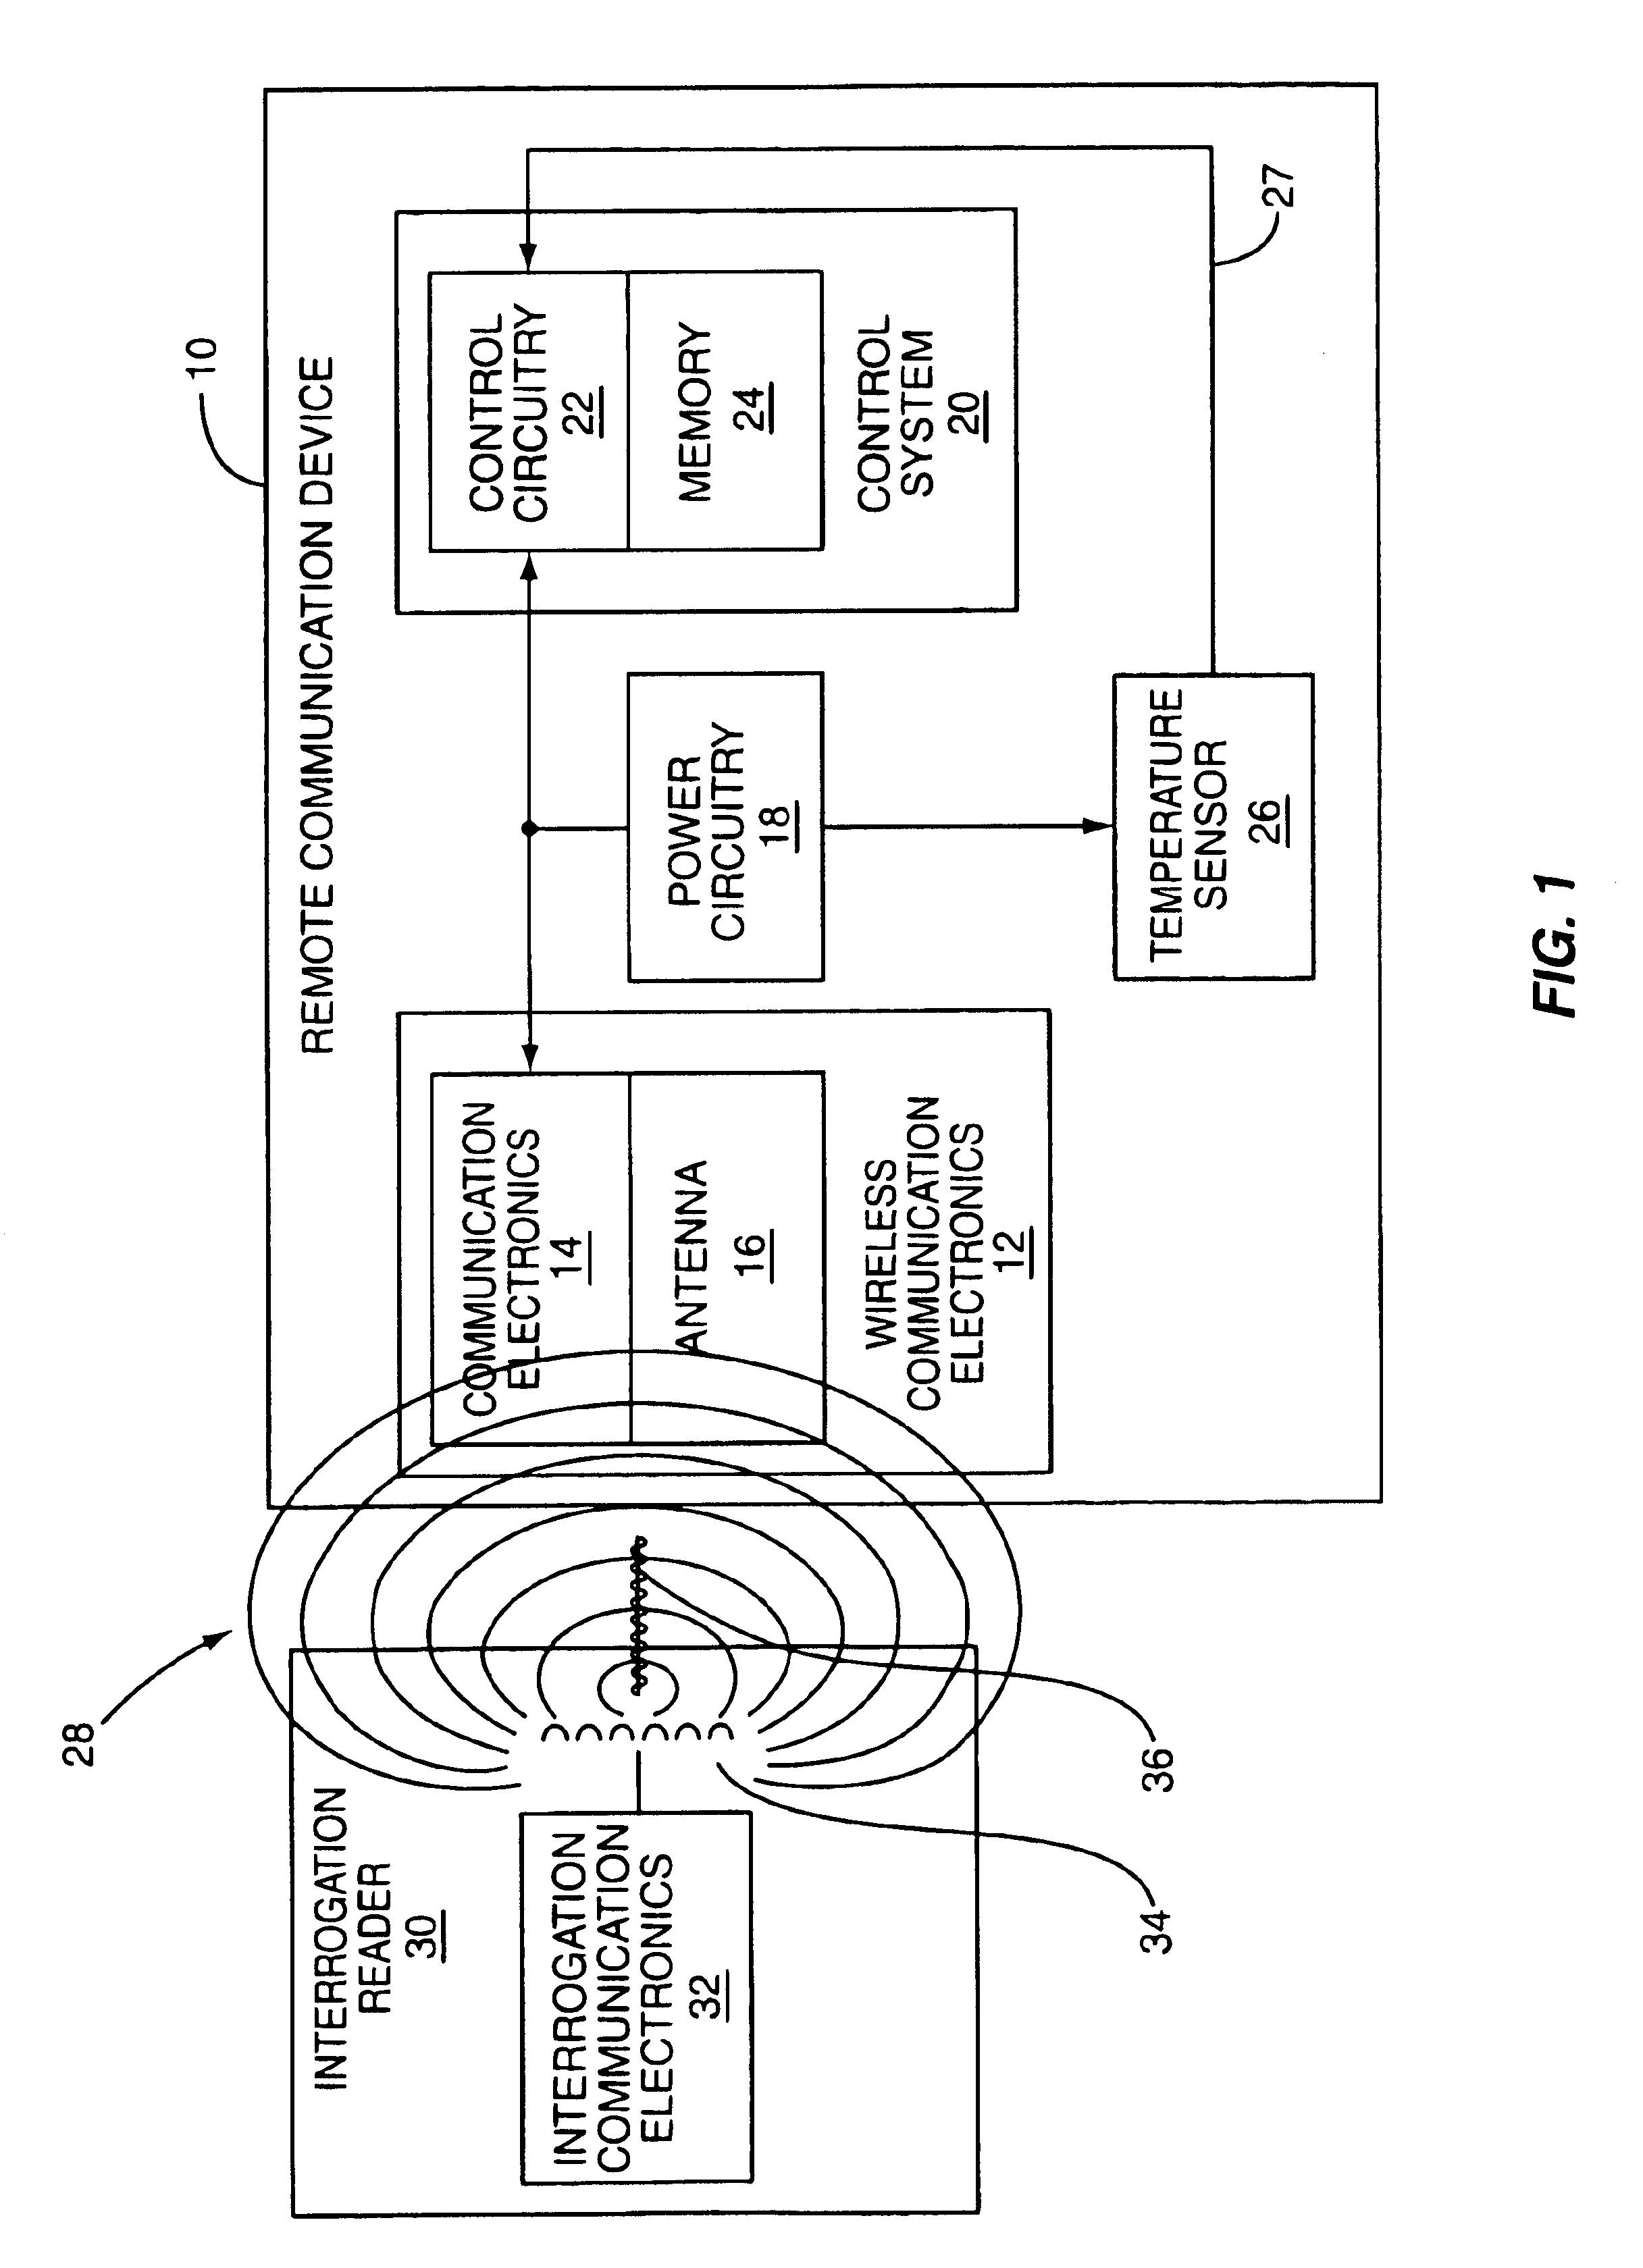 RFID temperature device and method